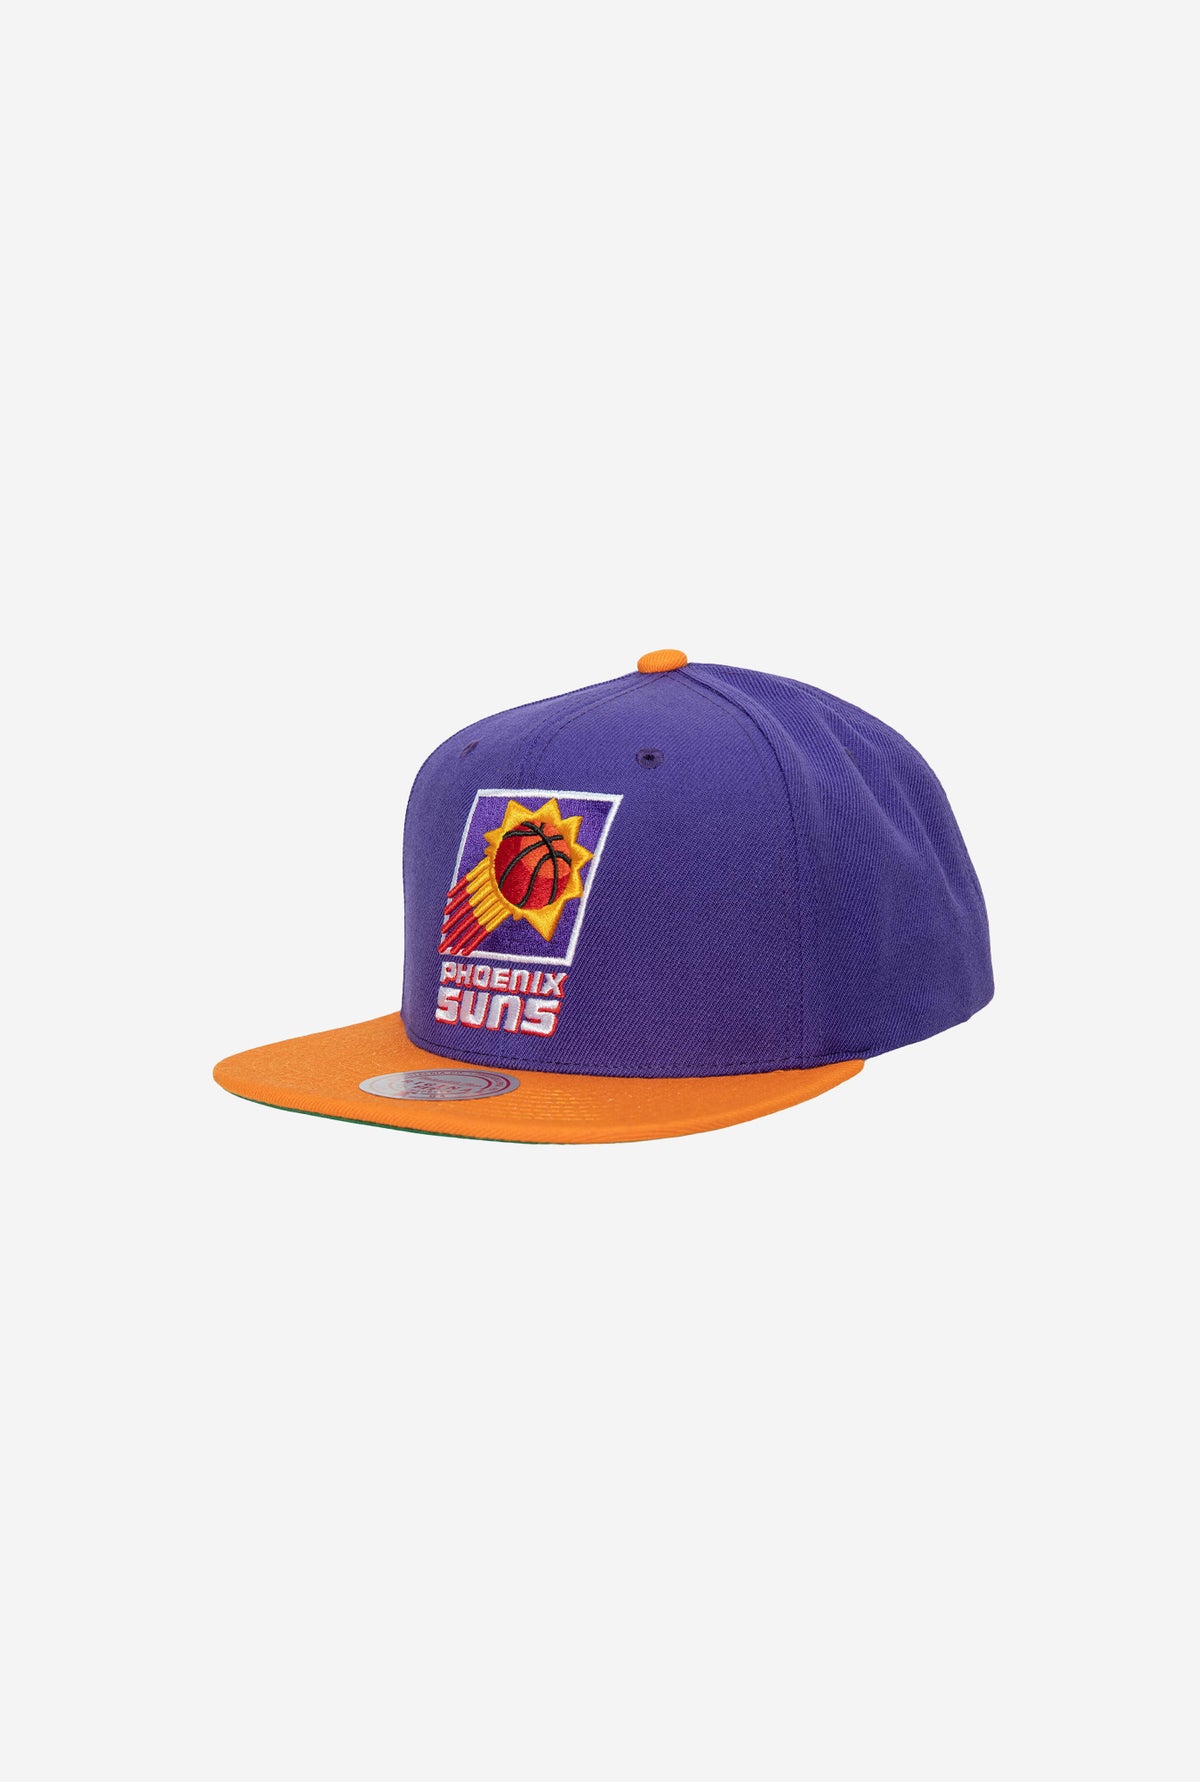 Phoenix Suns Team 2 Tone 2.0 Snapback HWC - Purple/Orange